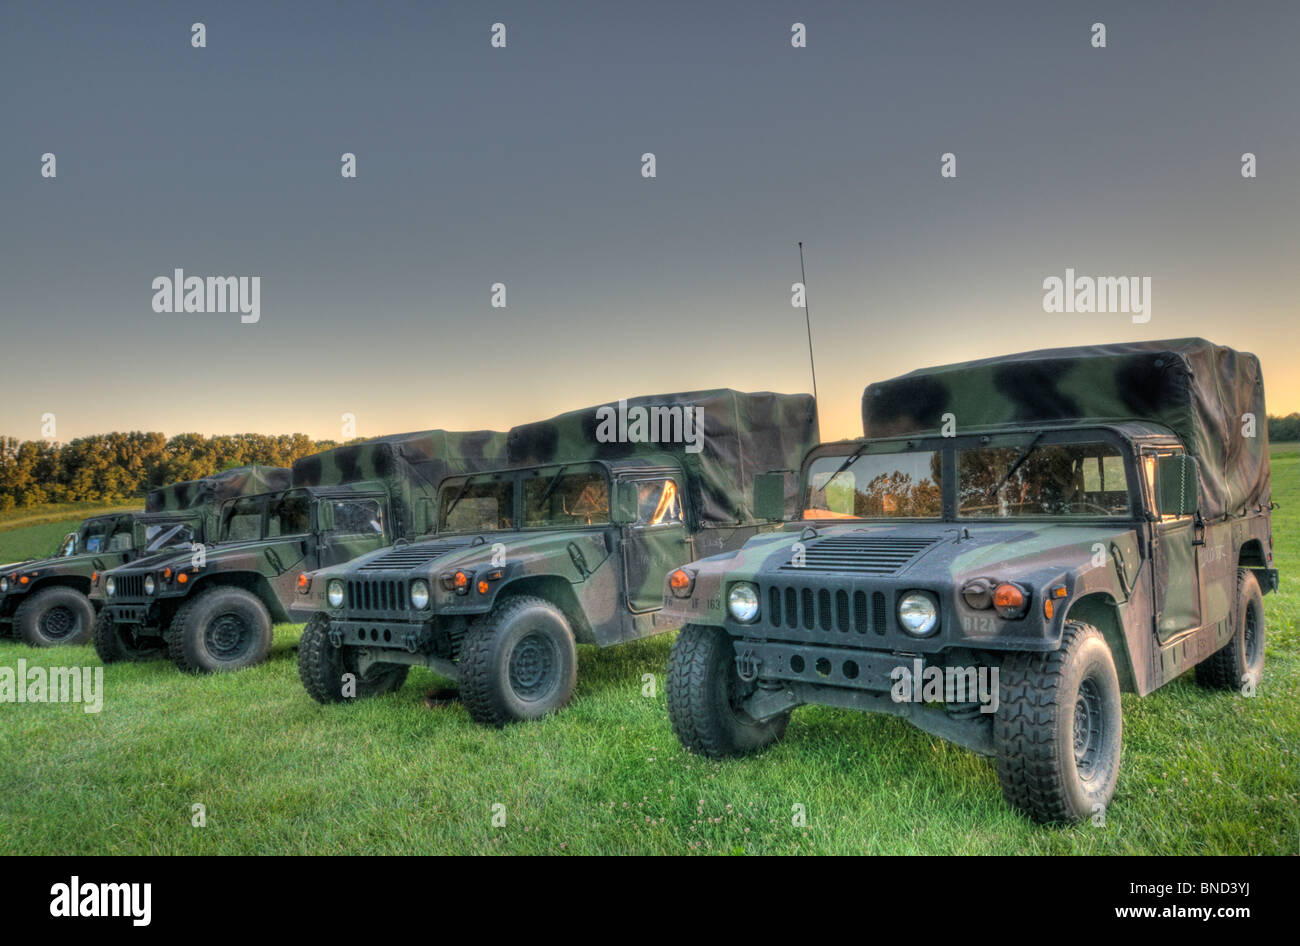 Military Land Vehicle Stock Photo